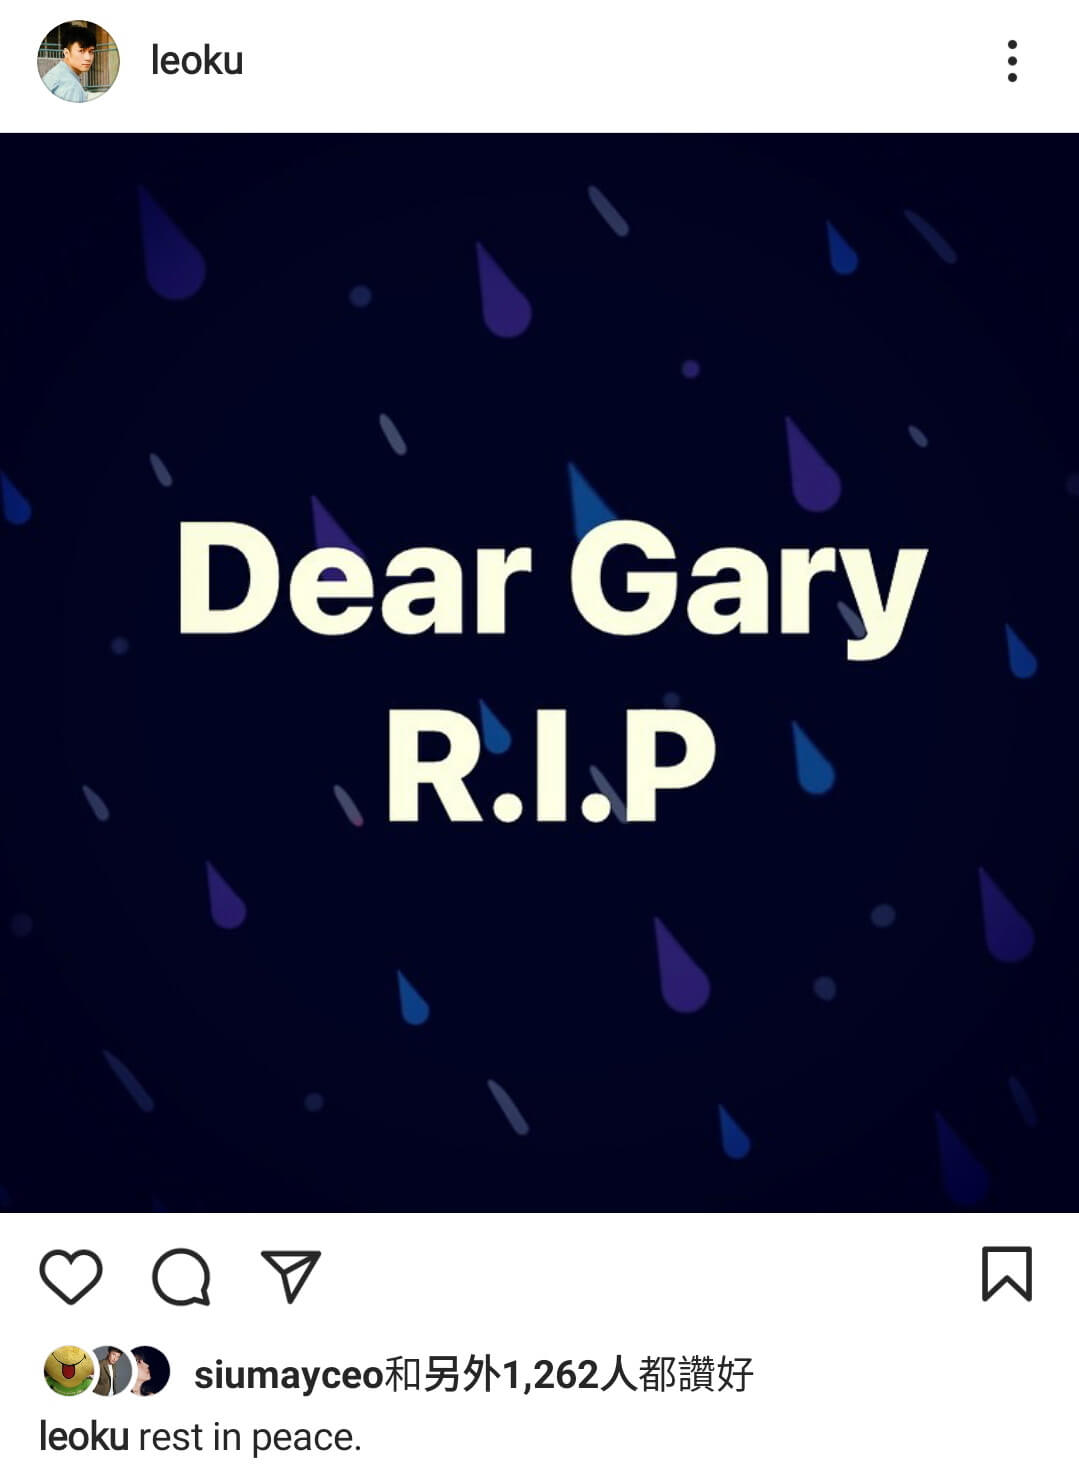 古巨基寫上：「Dear Gary R.I.P」